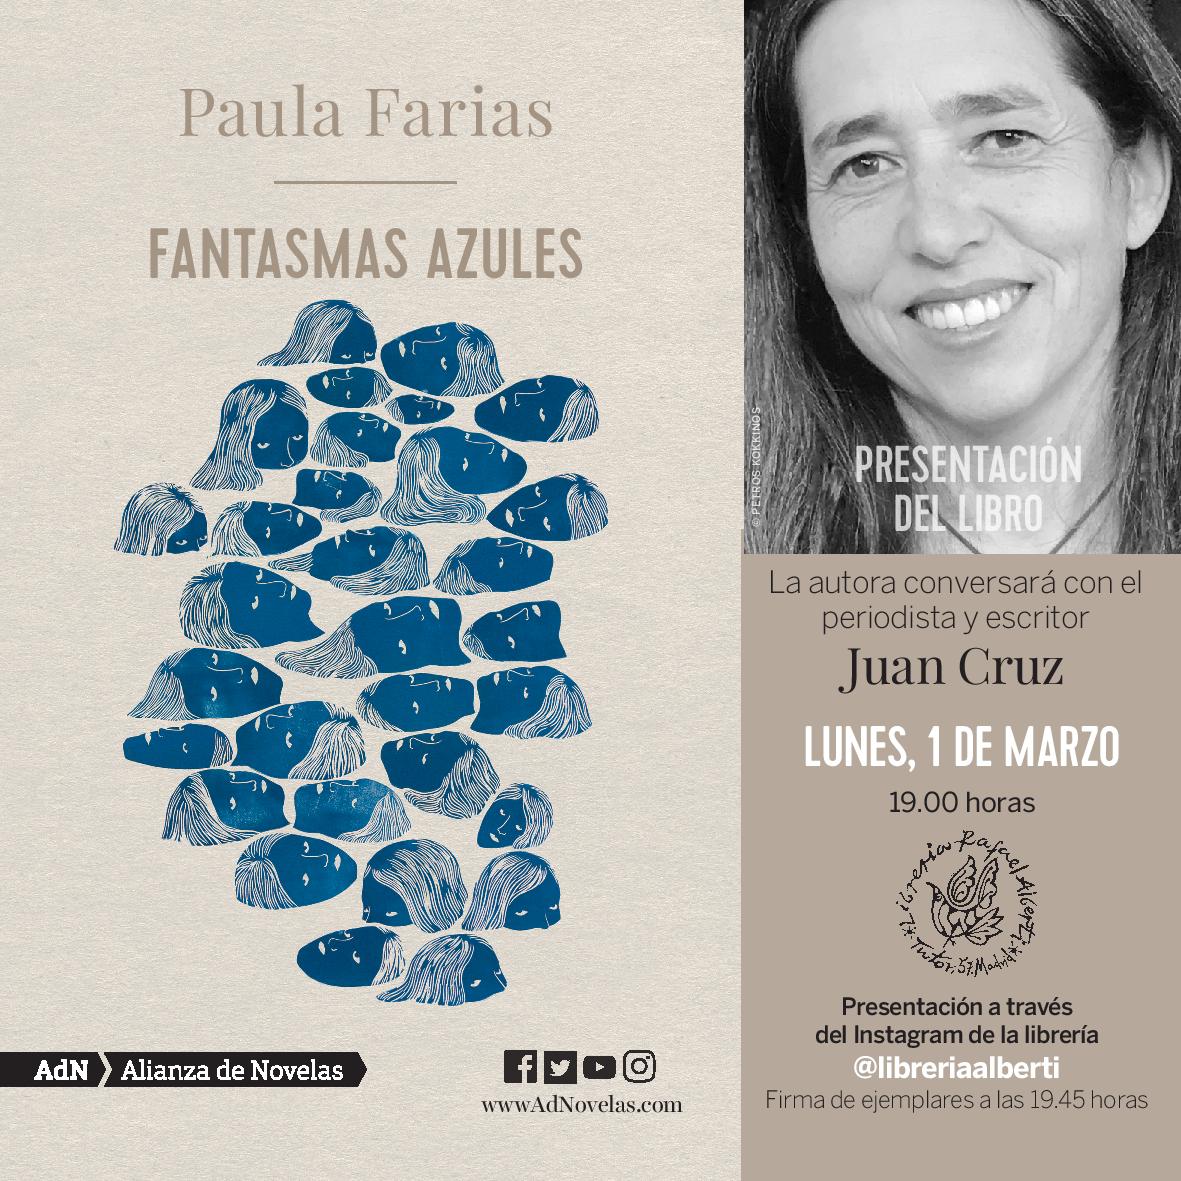 PAULA FARIAS presenta y firma 'Fantasmas azules' (AdN)